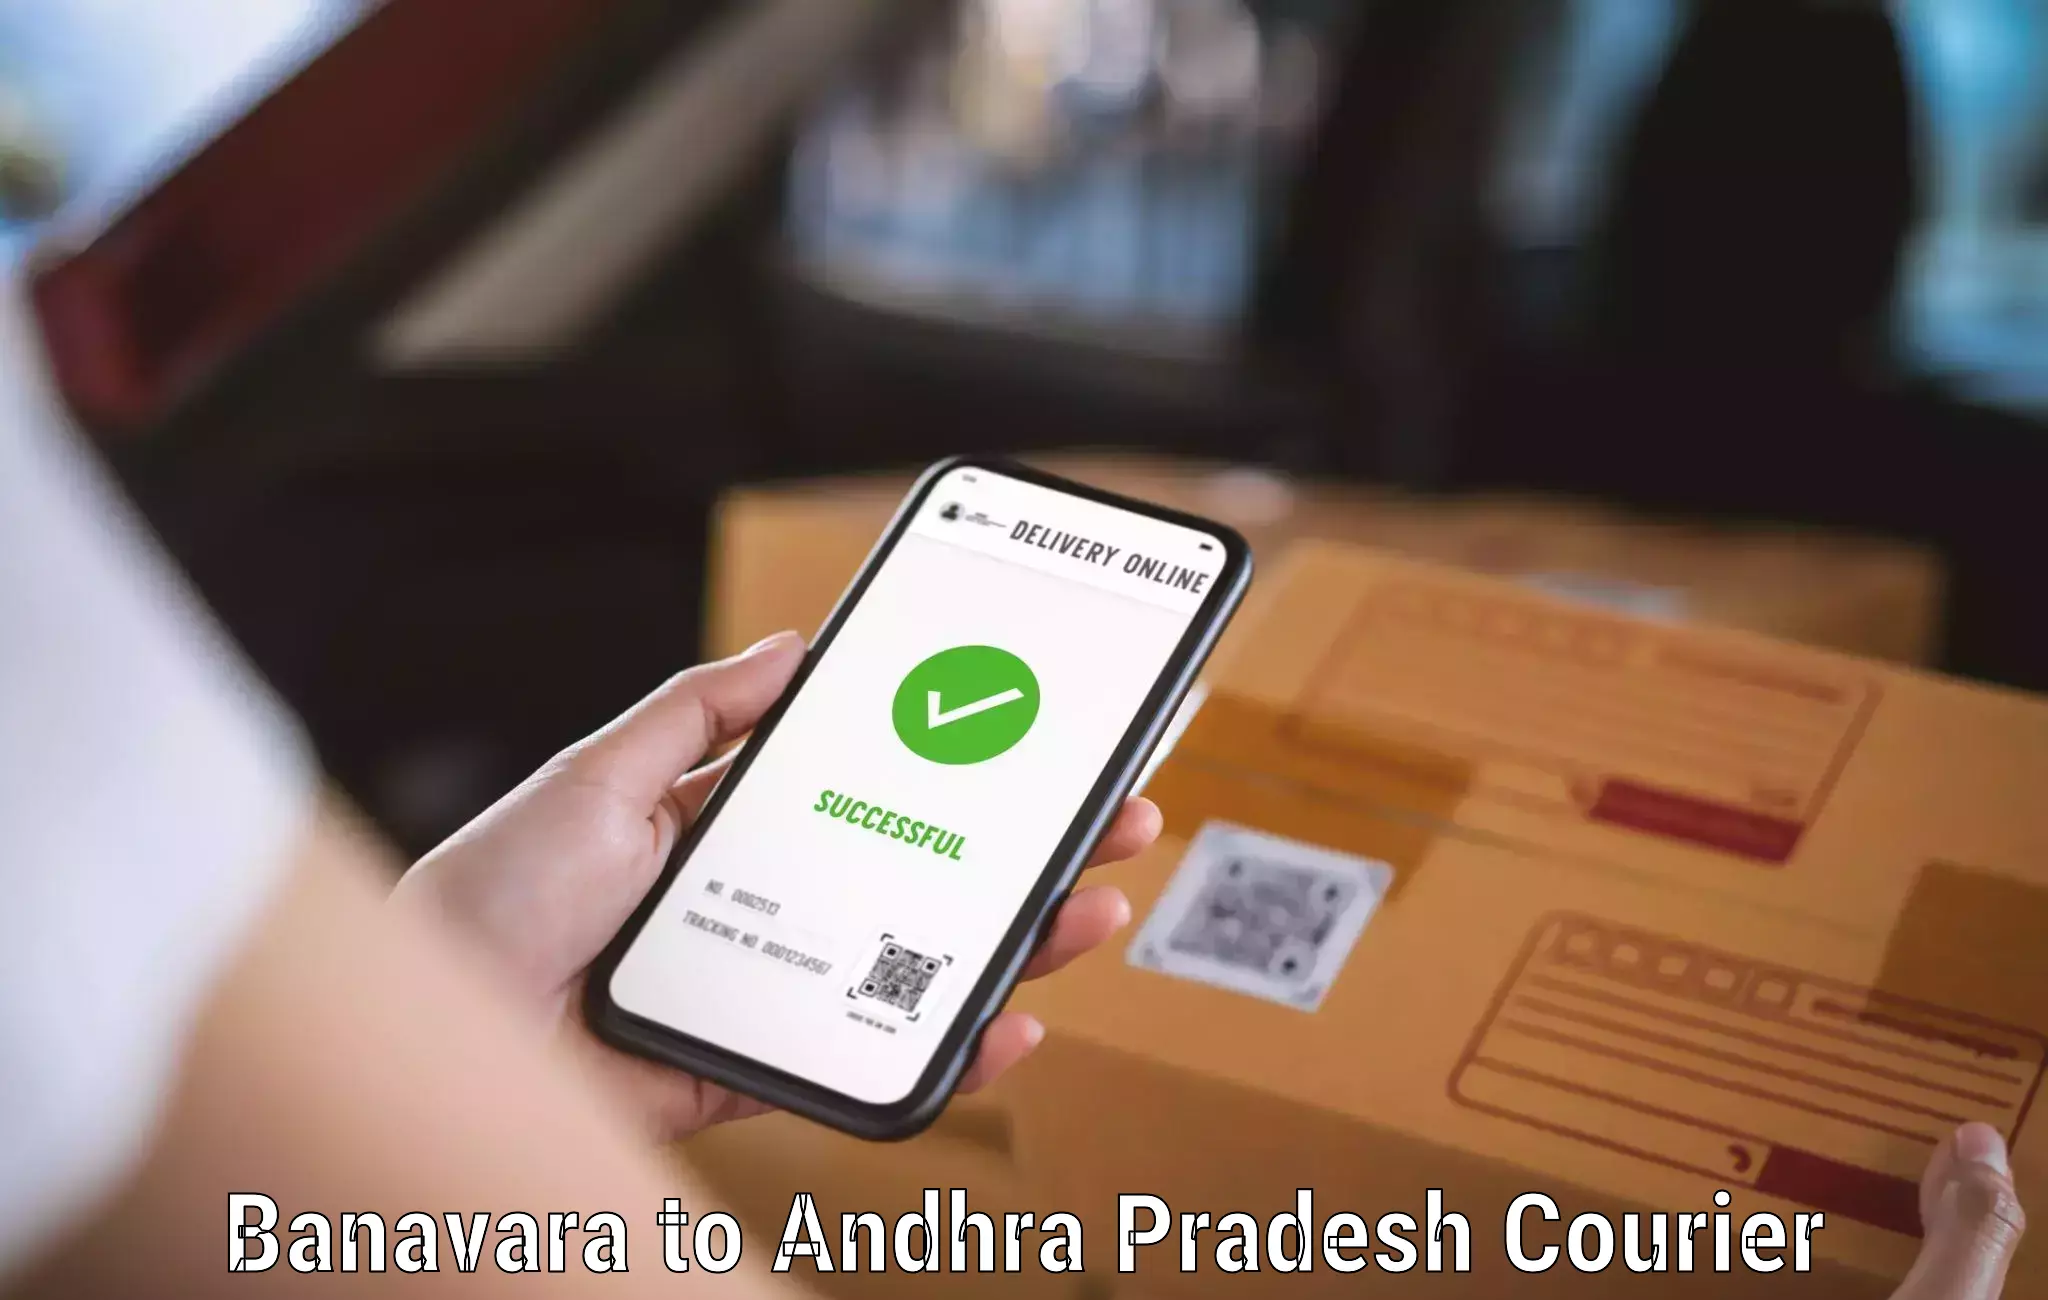 Package tracking Banavara to Tripuranthakam